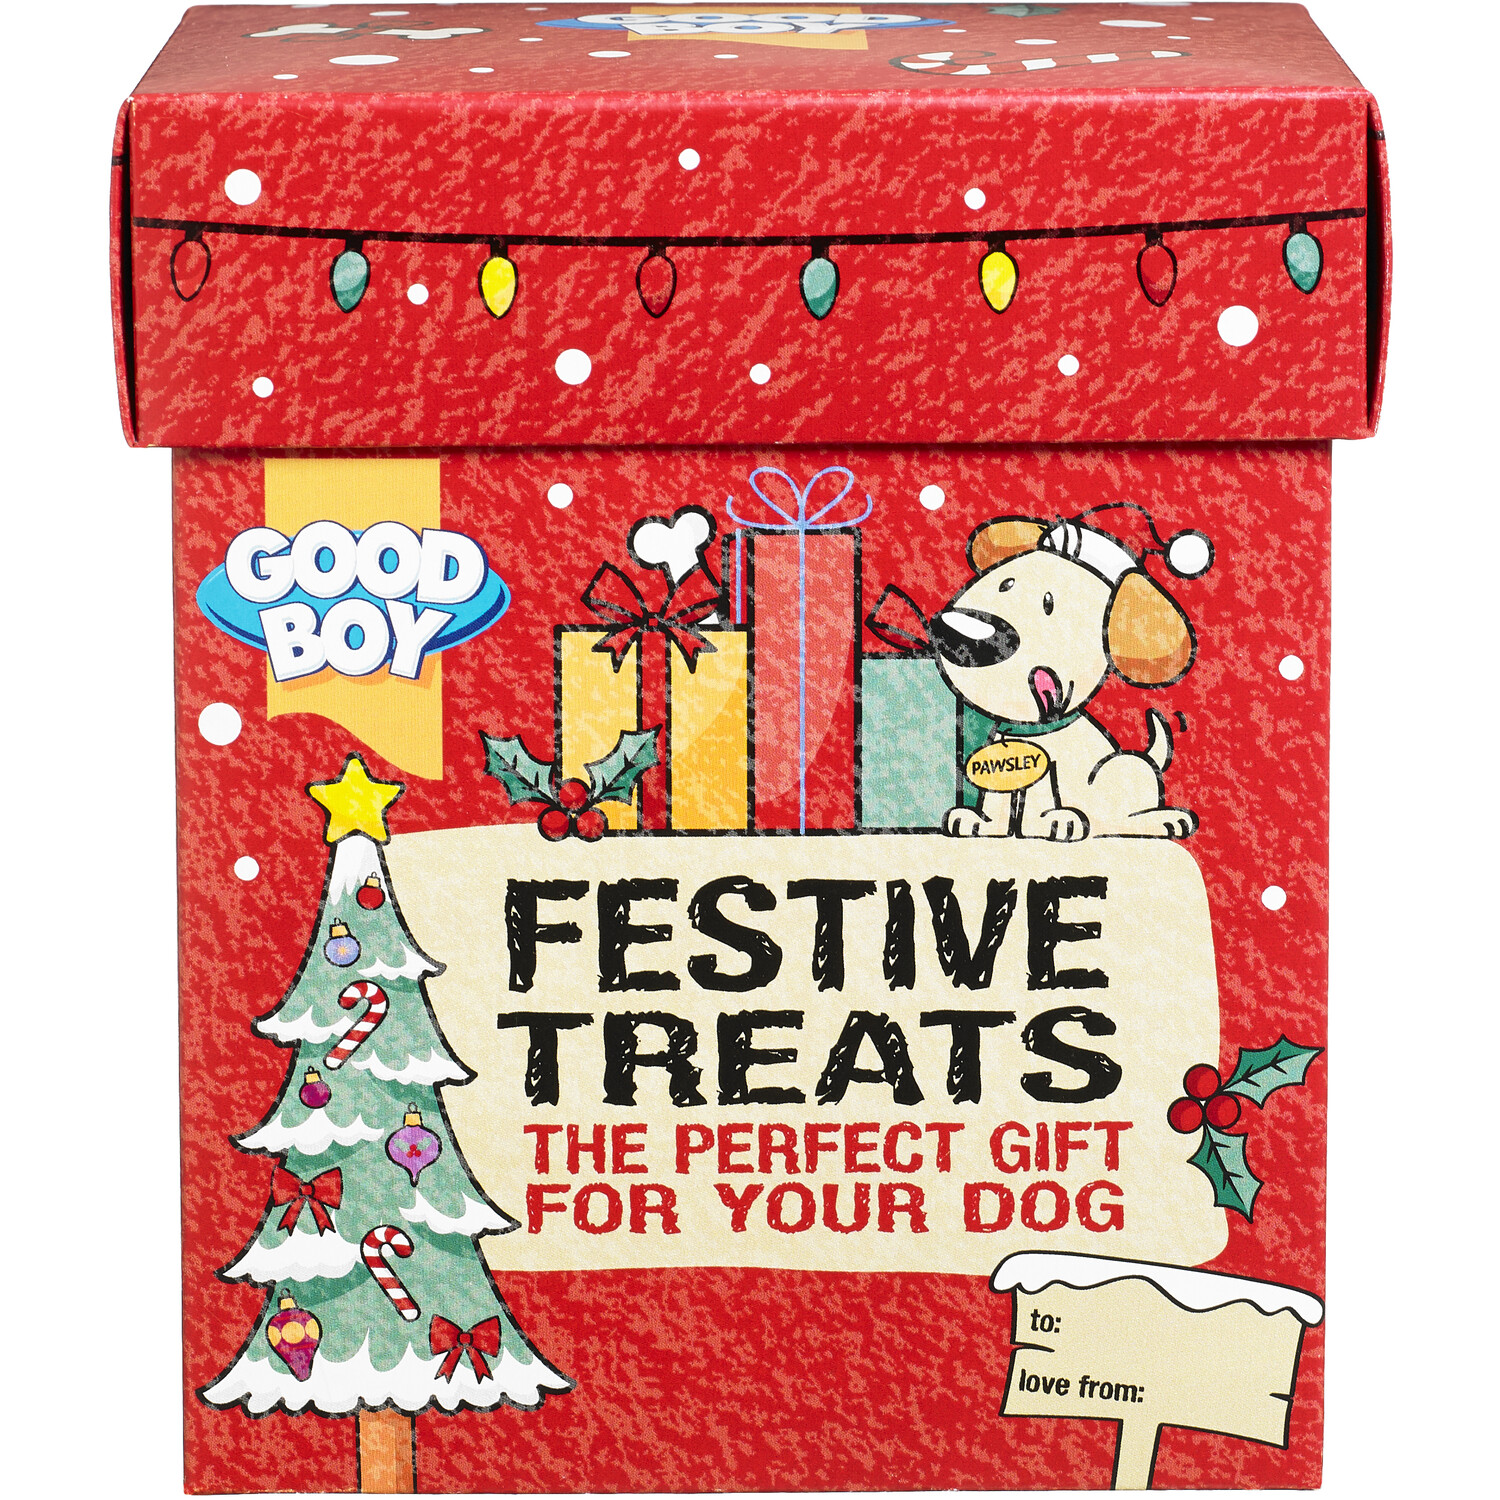 Good Boy Red Festive Treats Giftbox Image